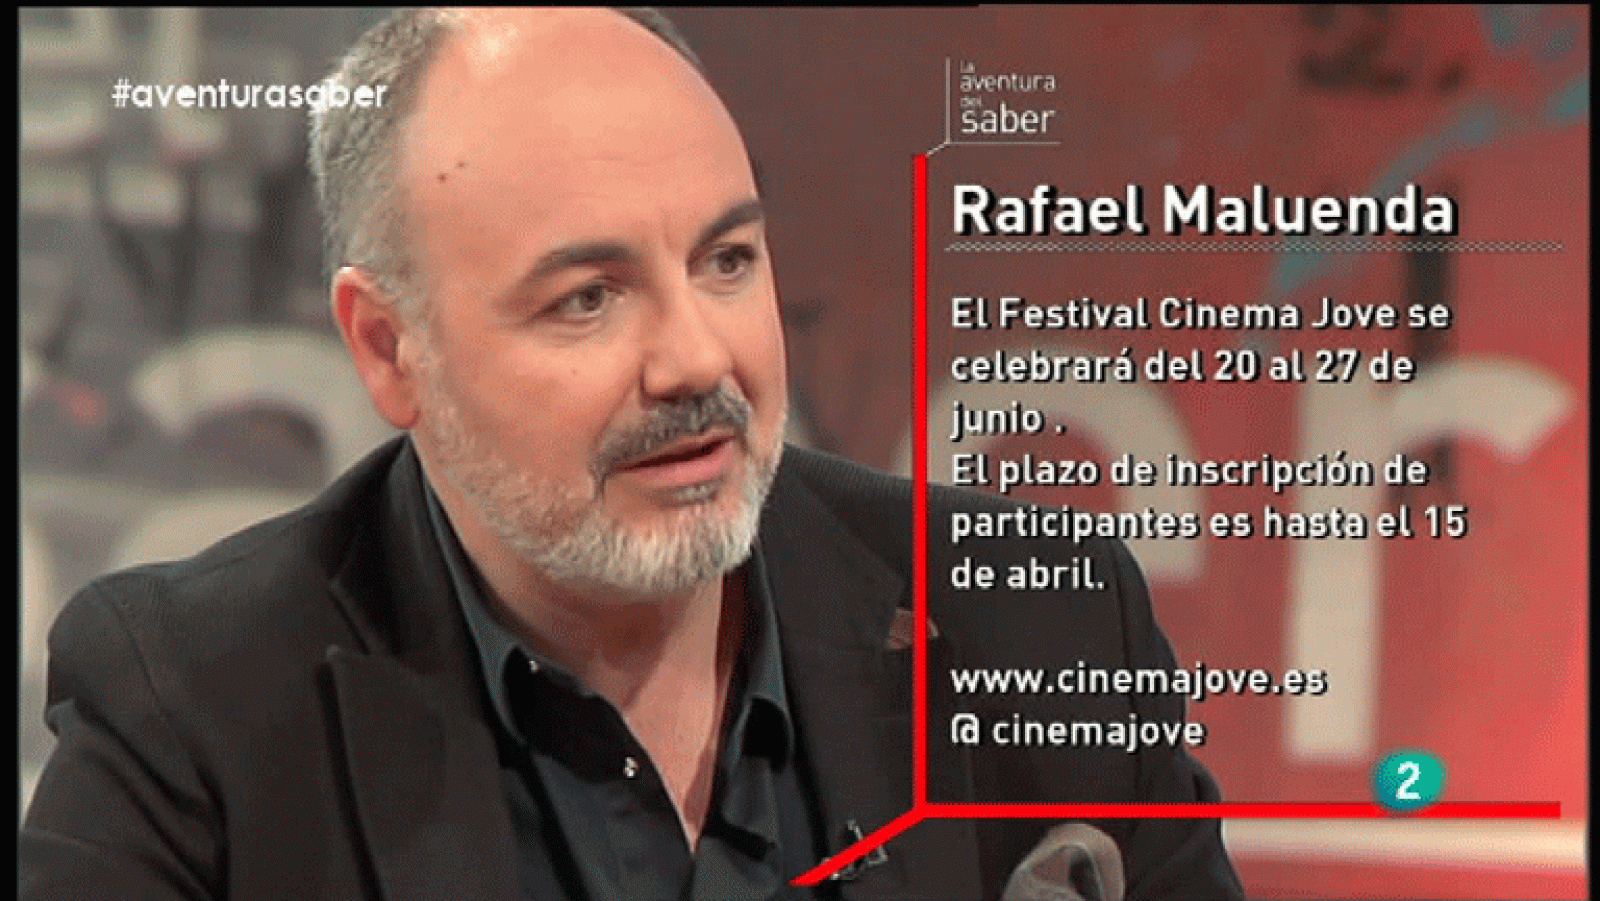  La Aventura del Saber. Rafael Maluenda. Cinema Jove 2014